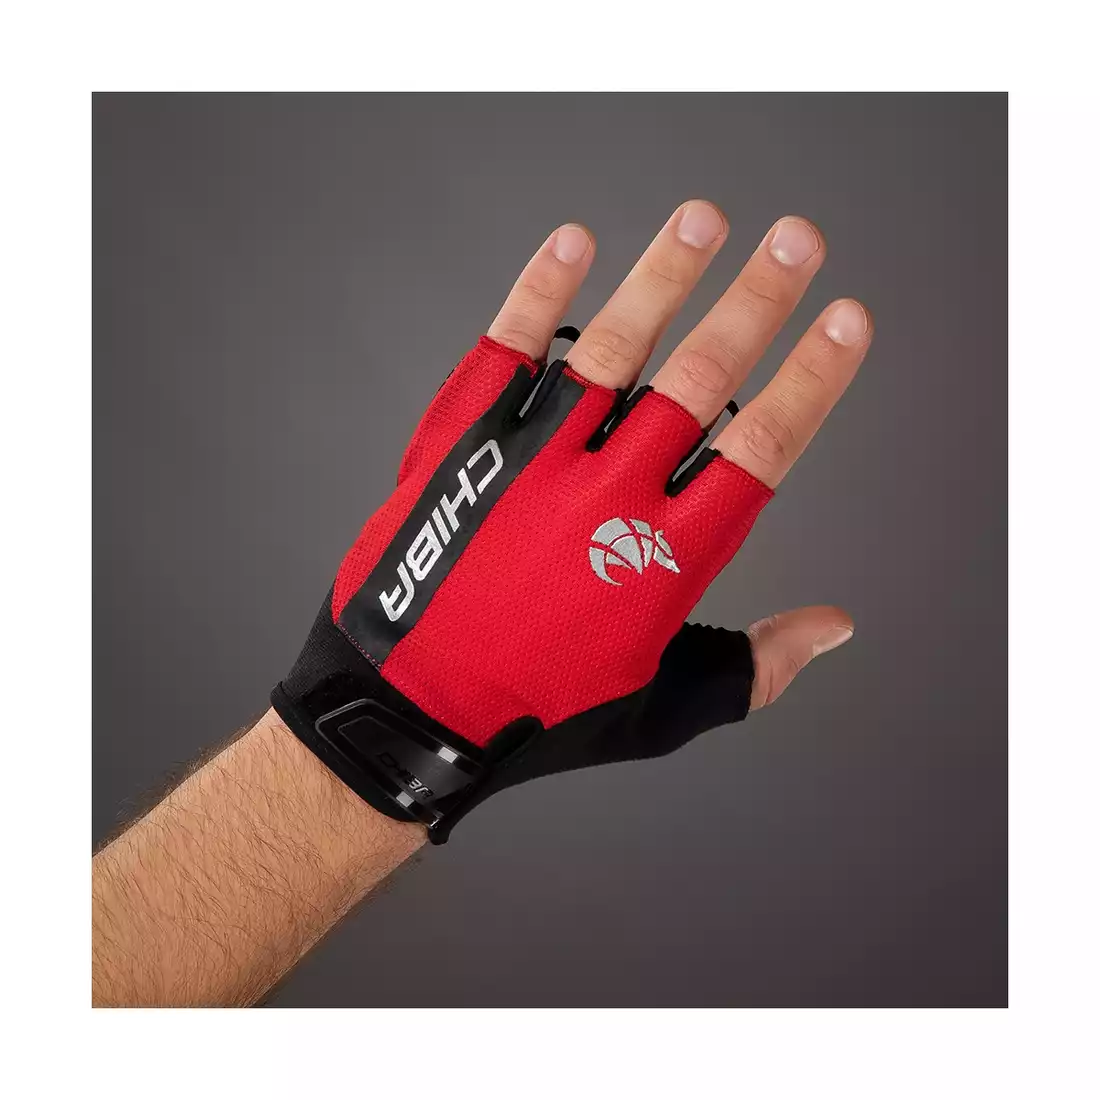 CHIBA AIR STRIKE Cycling gloves, red